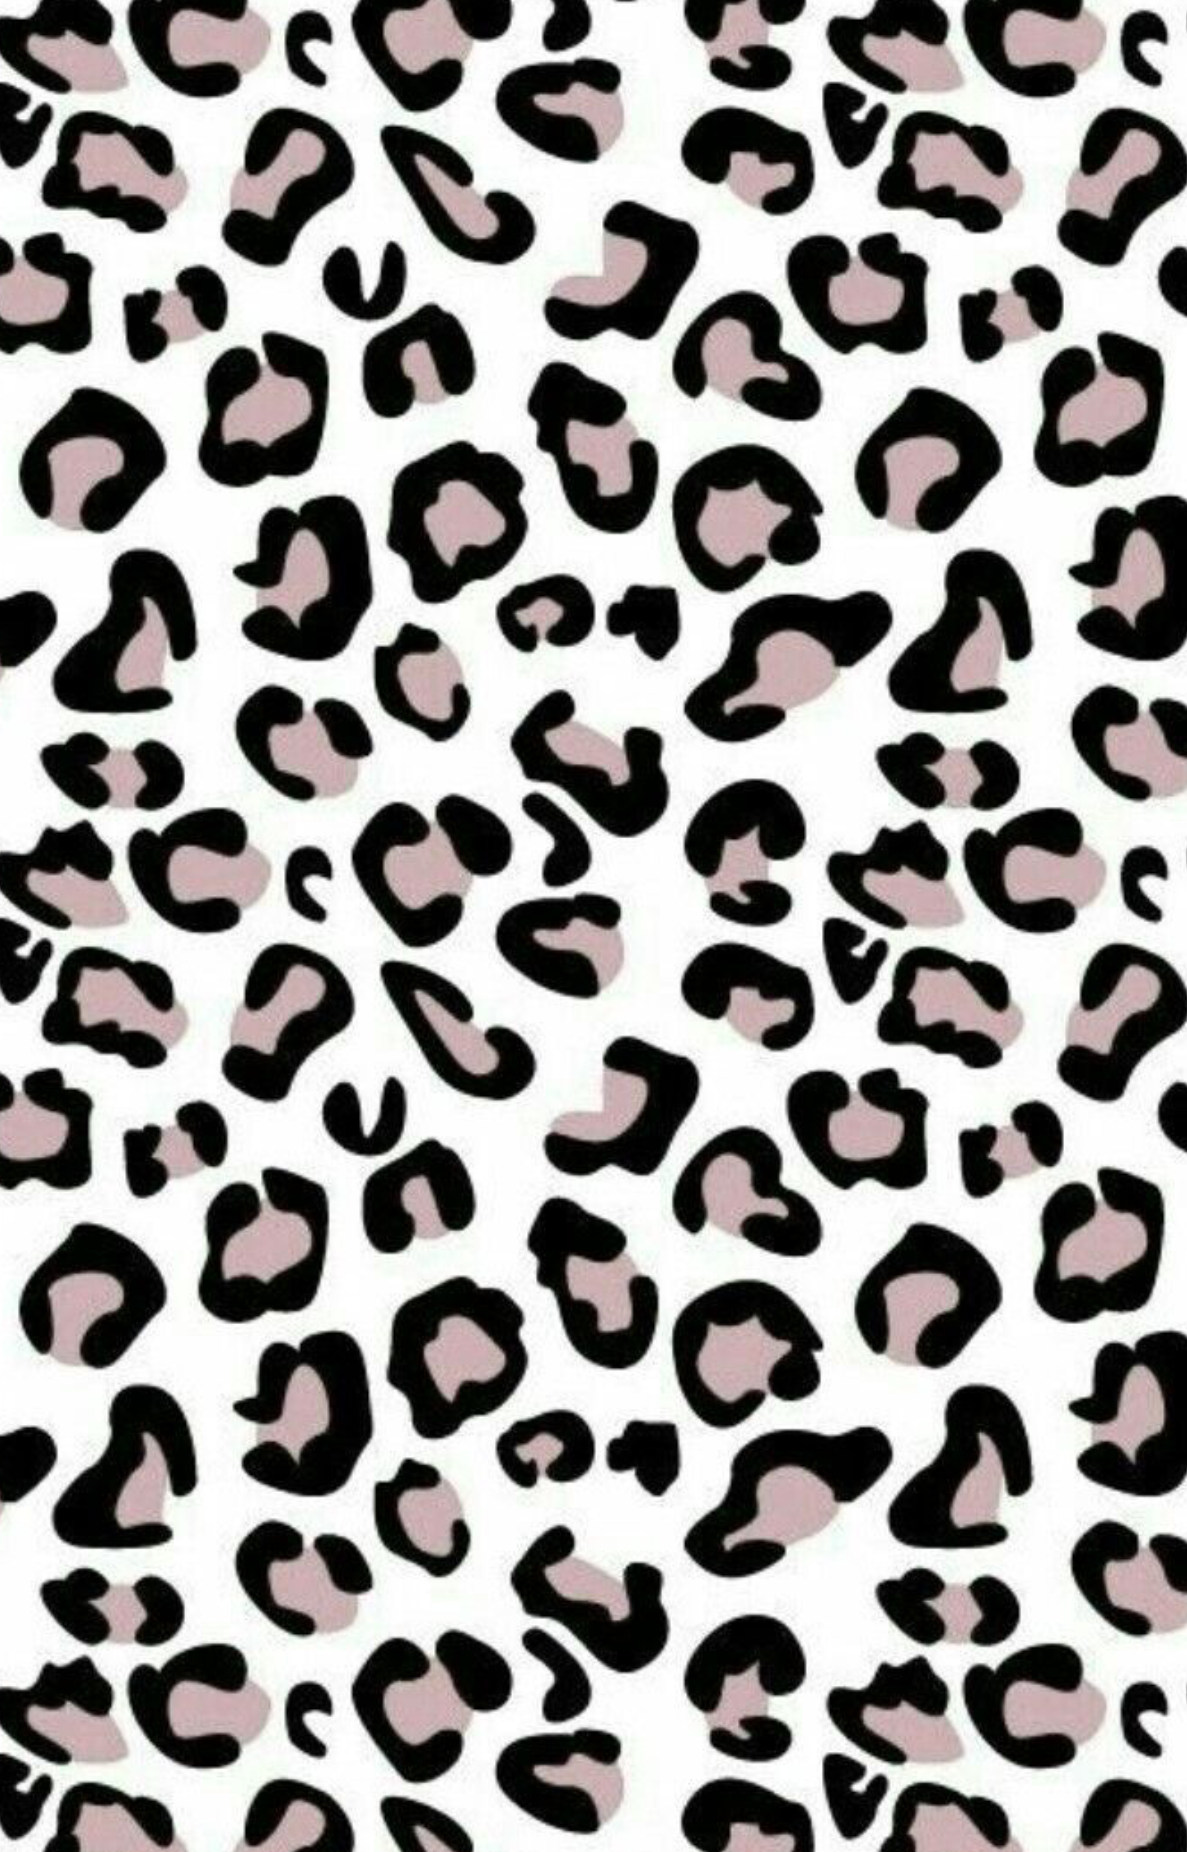  Leopardenmuster Hintergrundbild 1187x1852. Cute Trendy Leopard Print Pattern Phone Case iPhone Case by fionascreations. Leopard print wallpaper, Cow print wallpaper, Cheetah print wallpaper